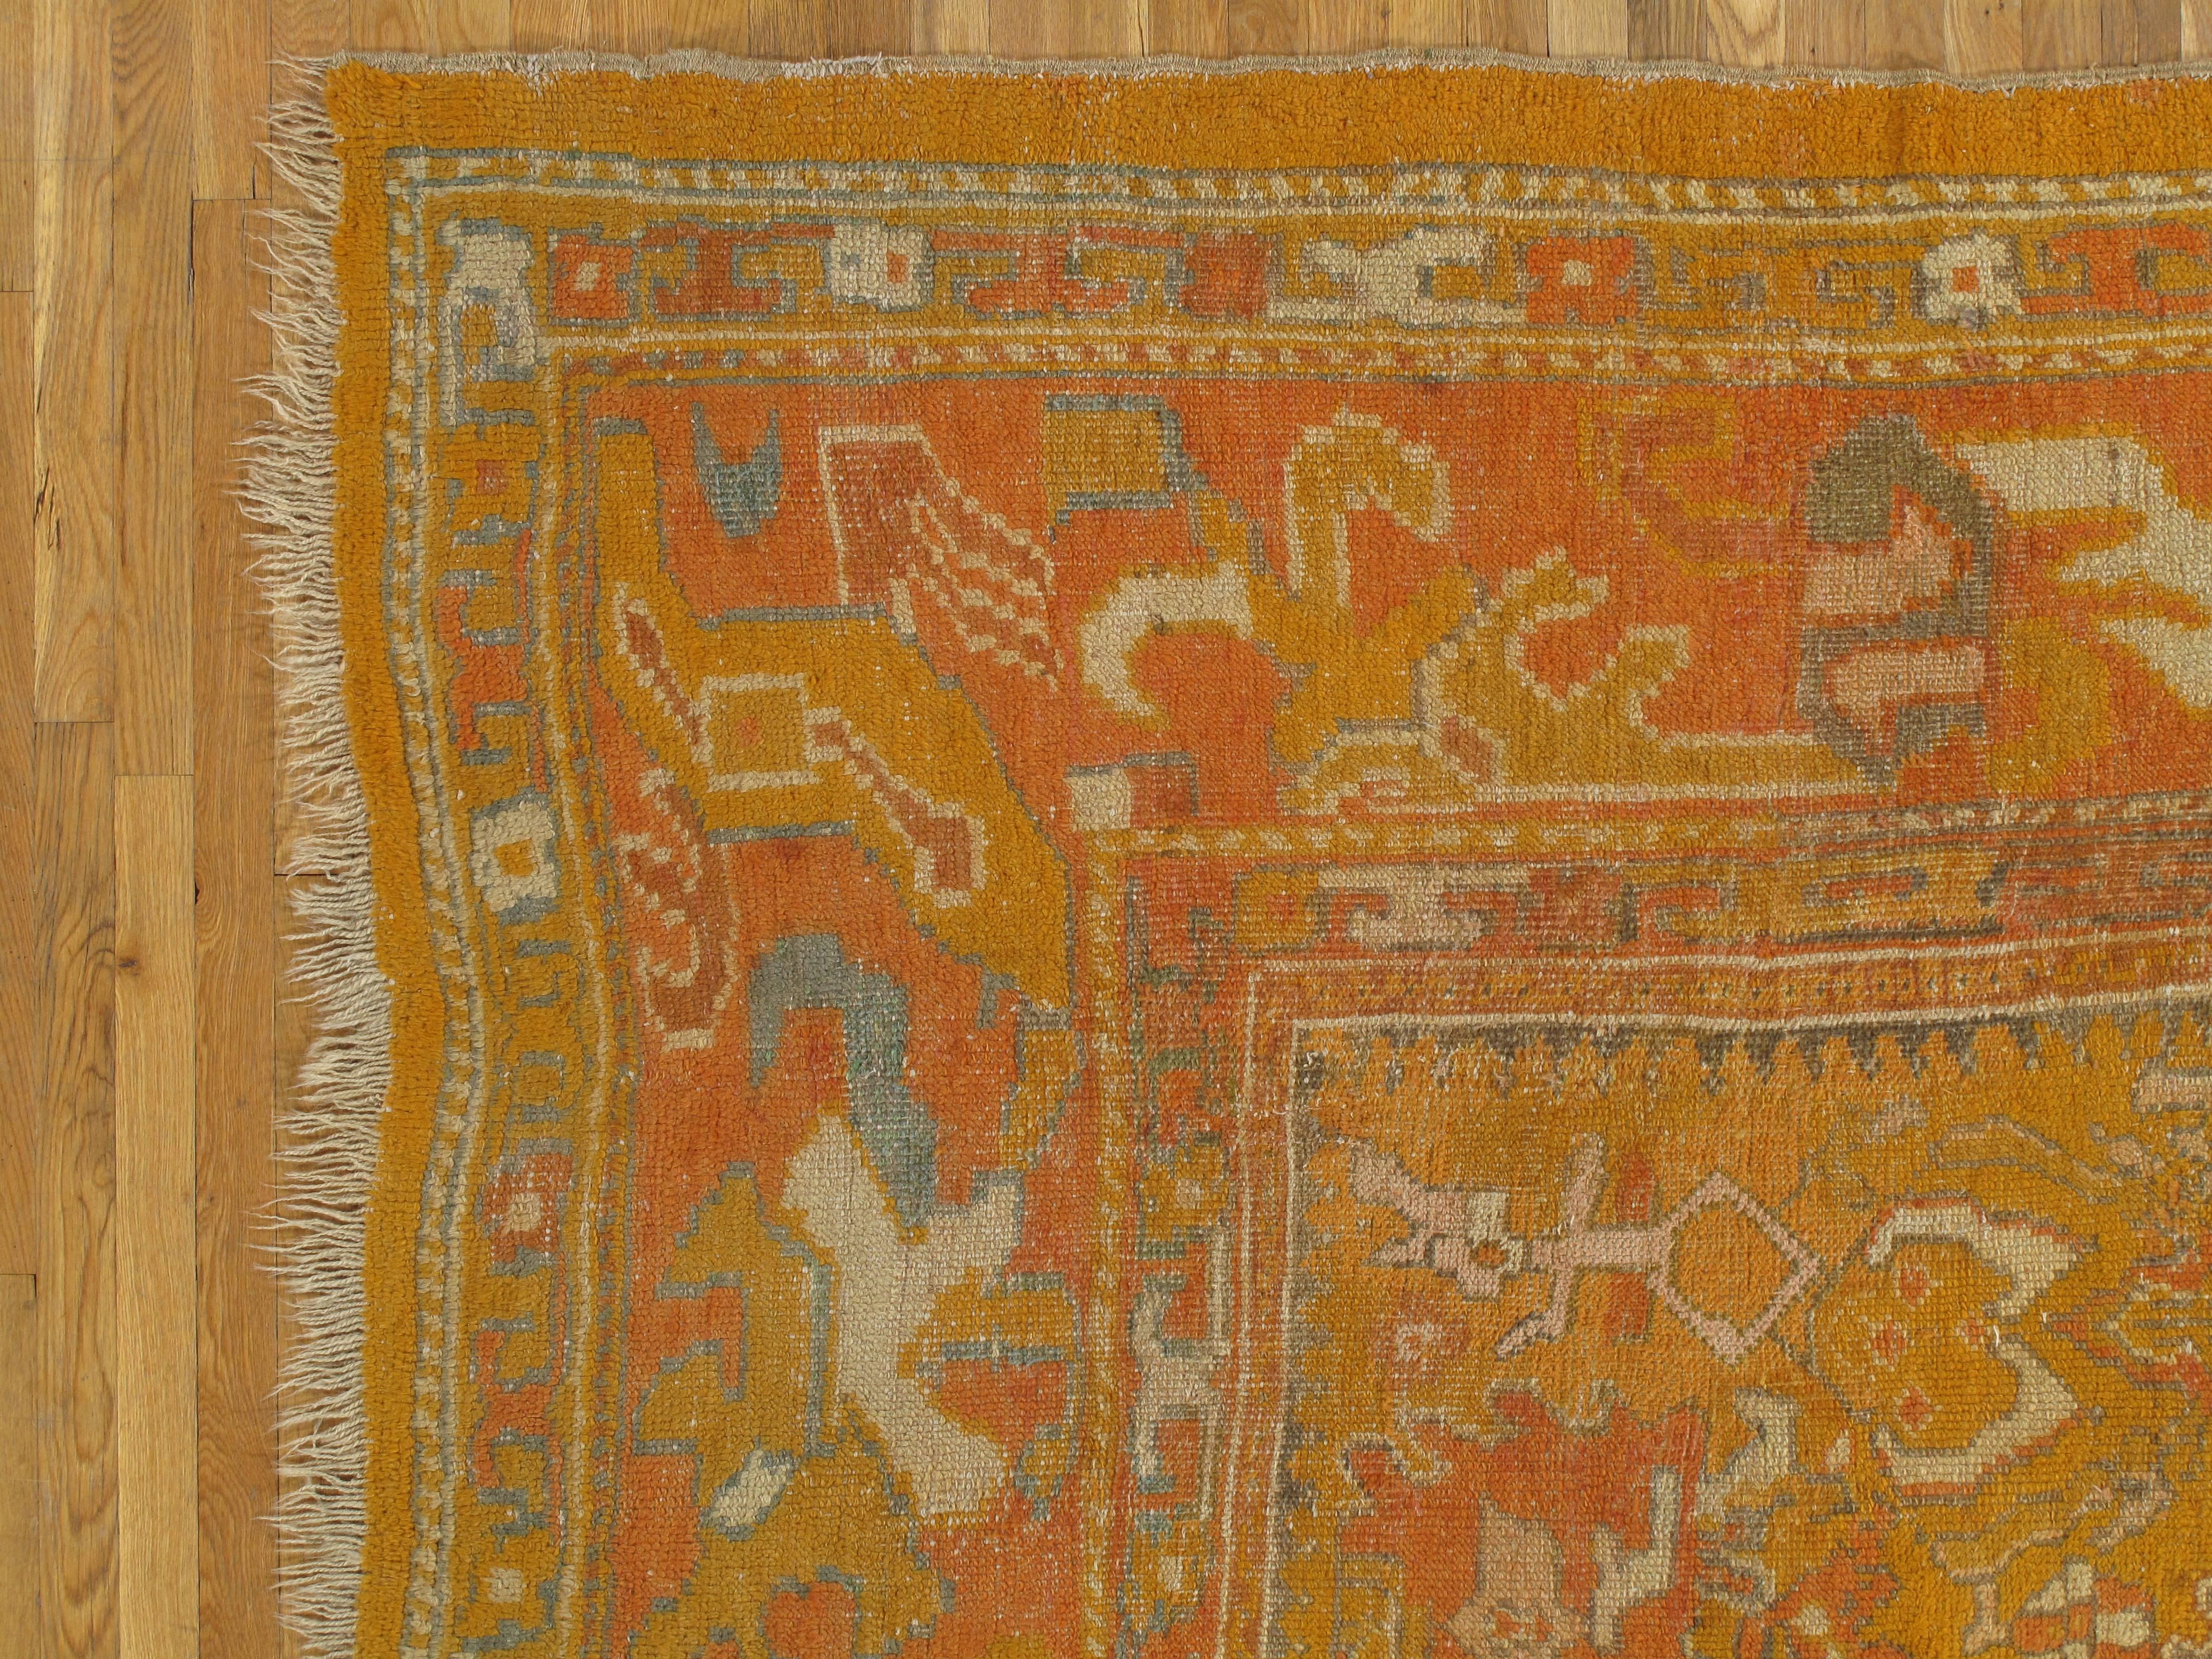 Antique Oushak Carpet, Oriental Rug, Handmade Orange, Ivory and Saffron (Handgeknüpft)